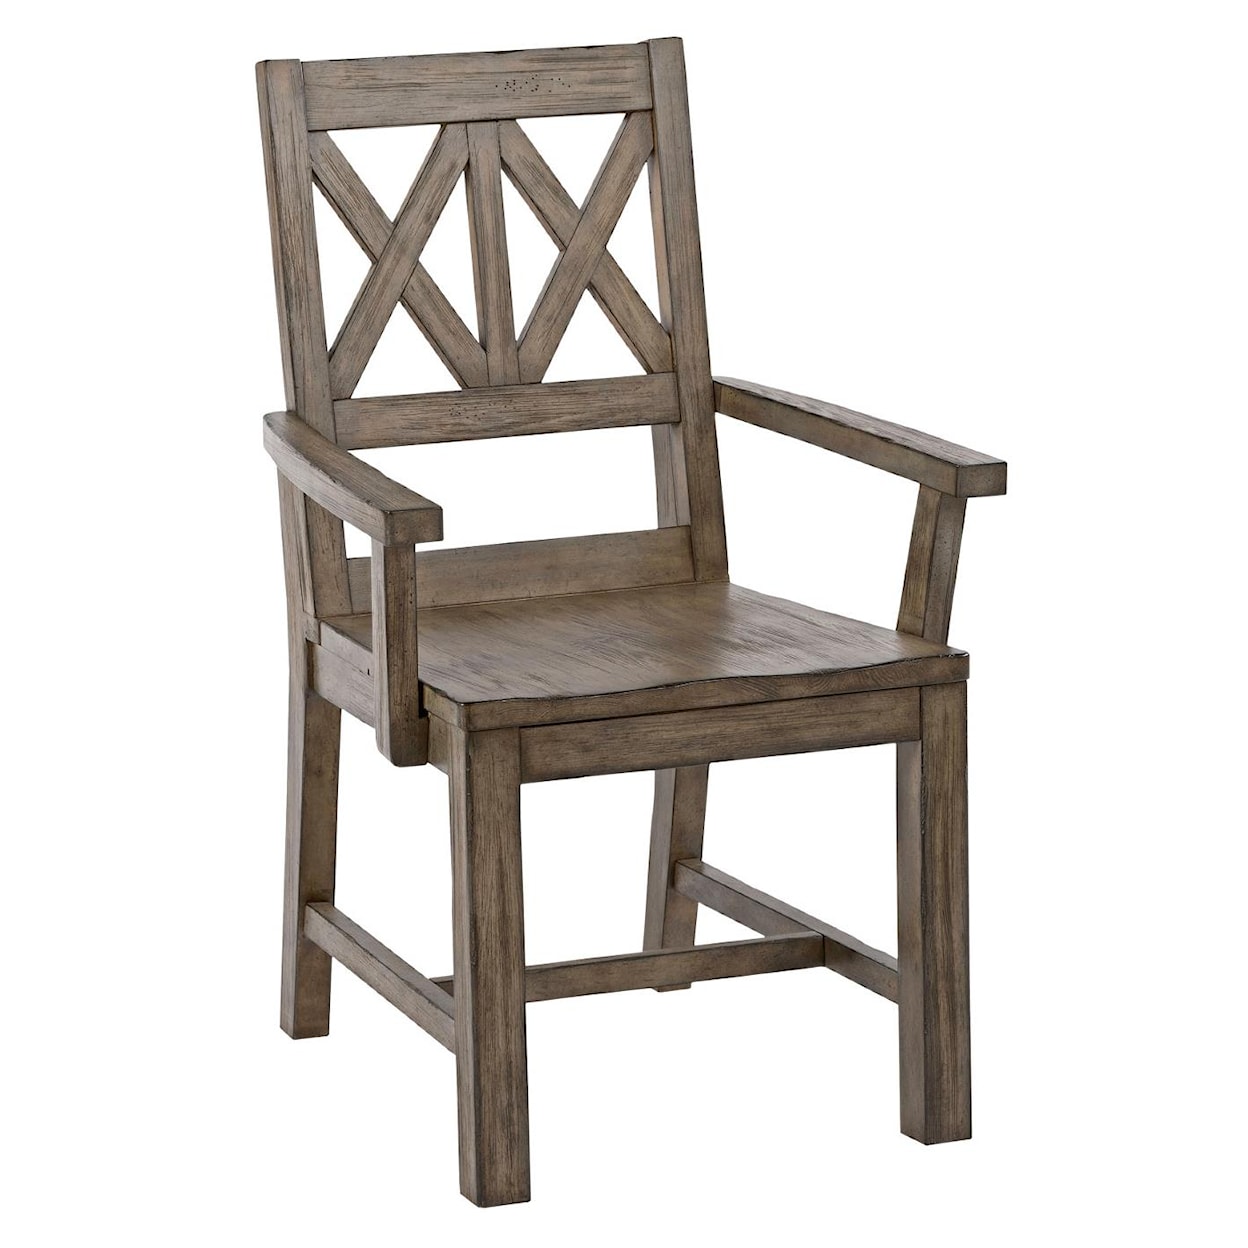 Kincaid Furniture Foundry Wood Arm Chair